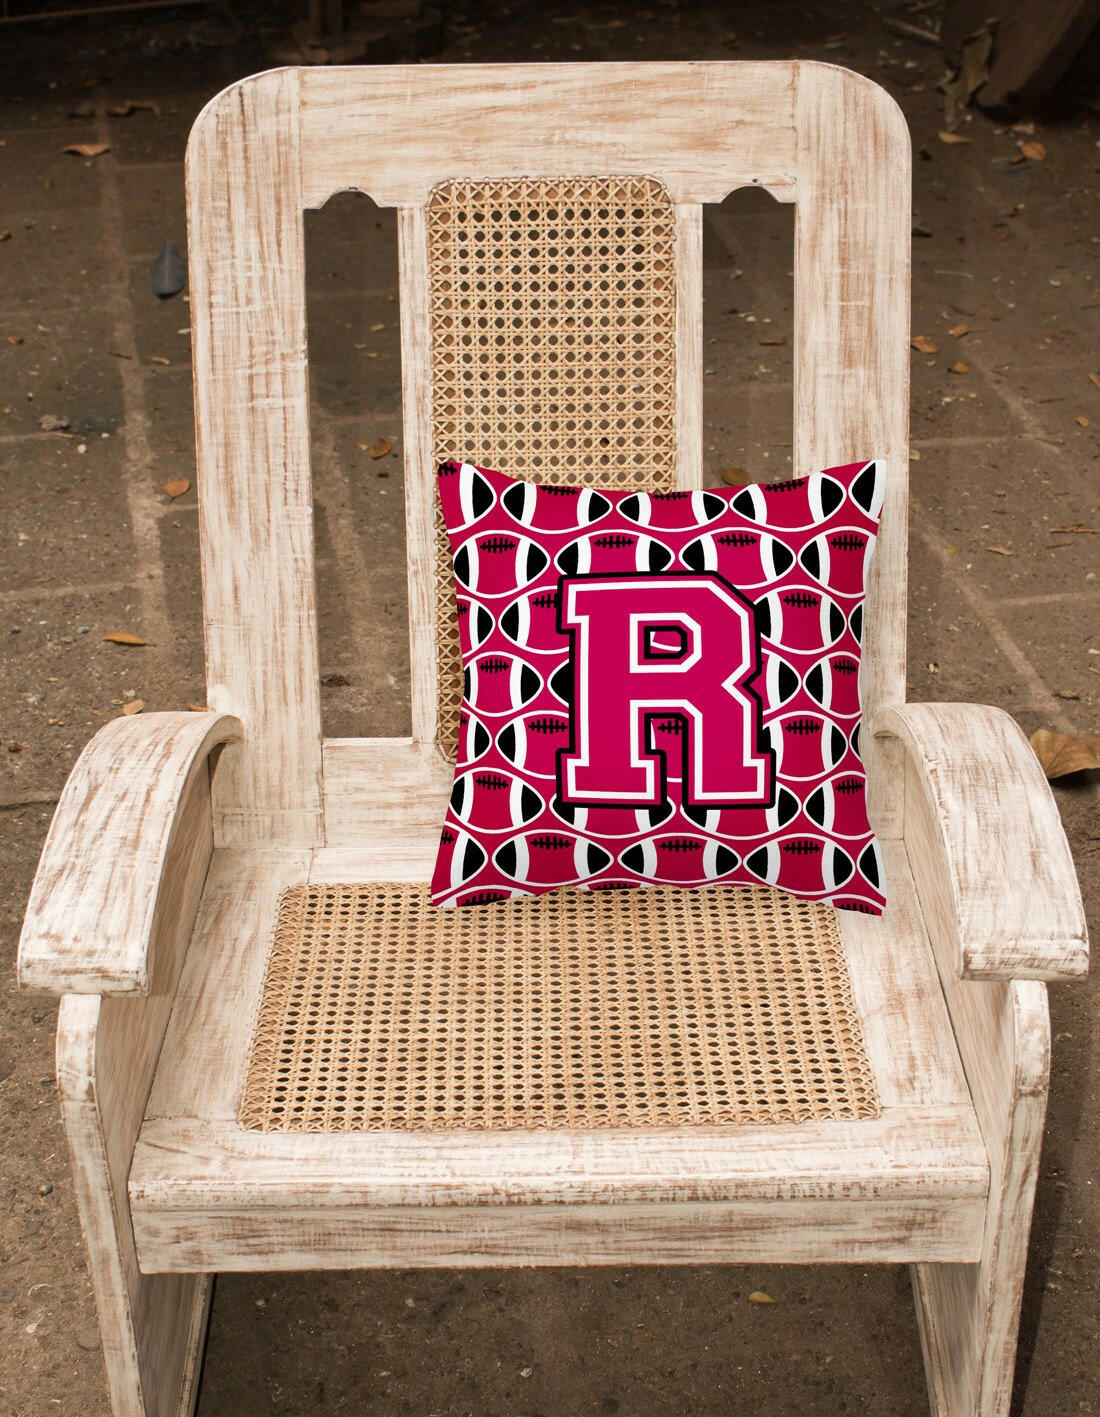 Letter R Football Crimson and White Fabric Decorative Pillow CJ1079-RPW1414 by Caroline's Treasures